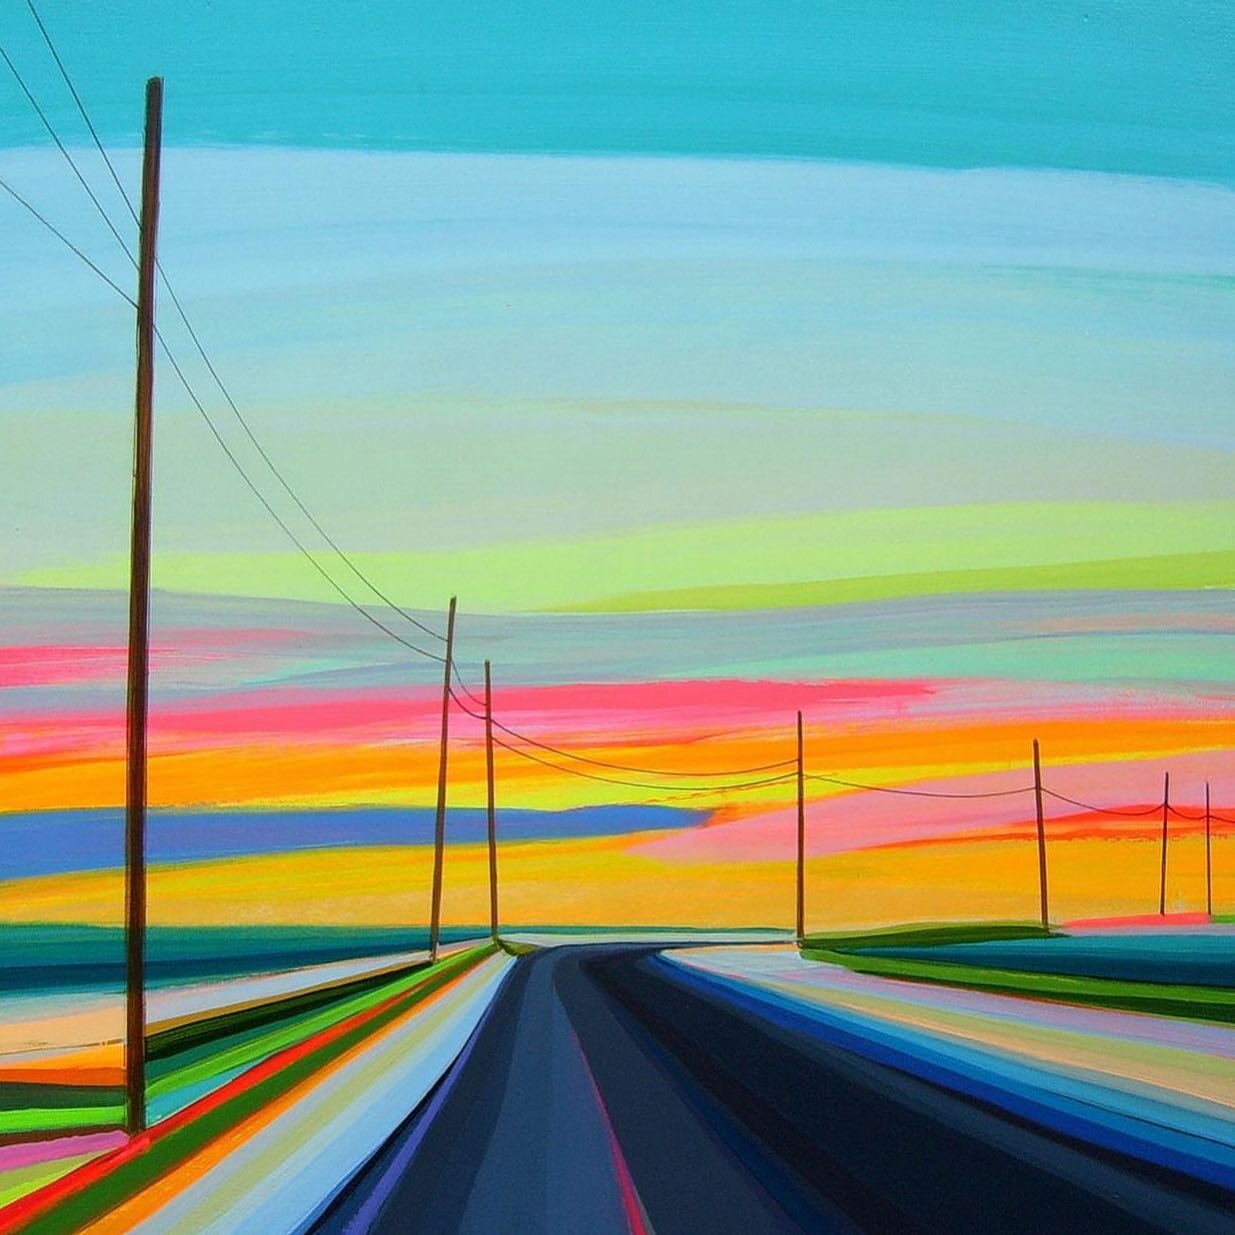 &ldquo;Sunset On Gerard Drive&rdquo; by Grant Haffner @granthaffner 

#granthaffner